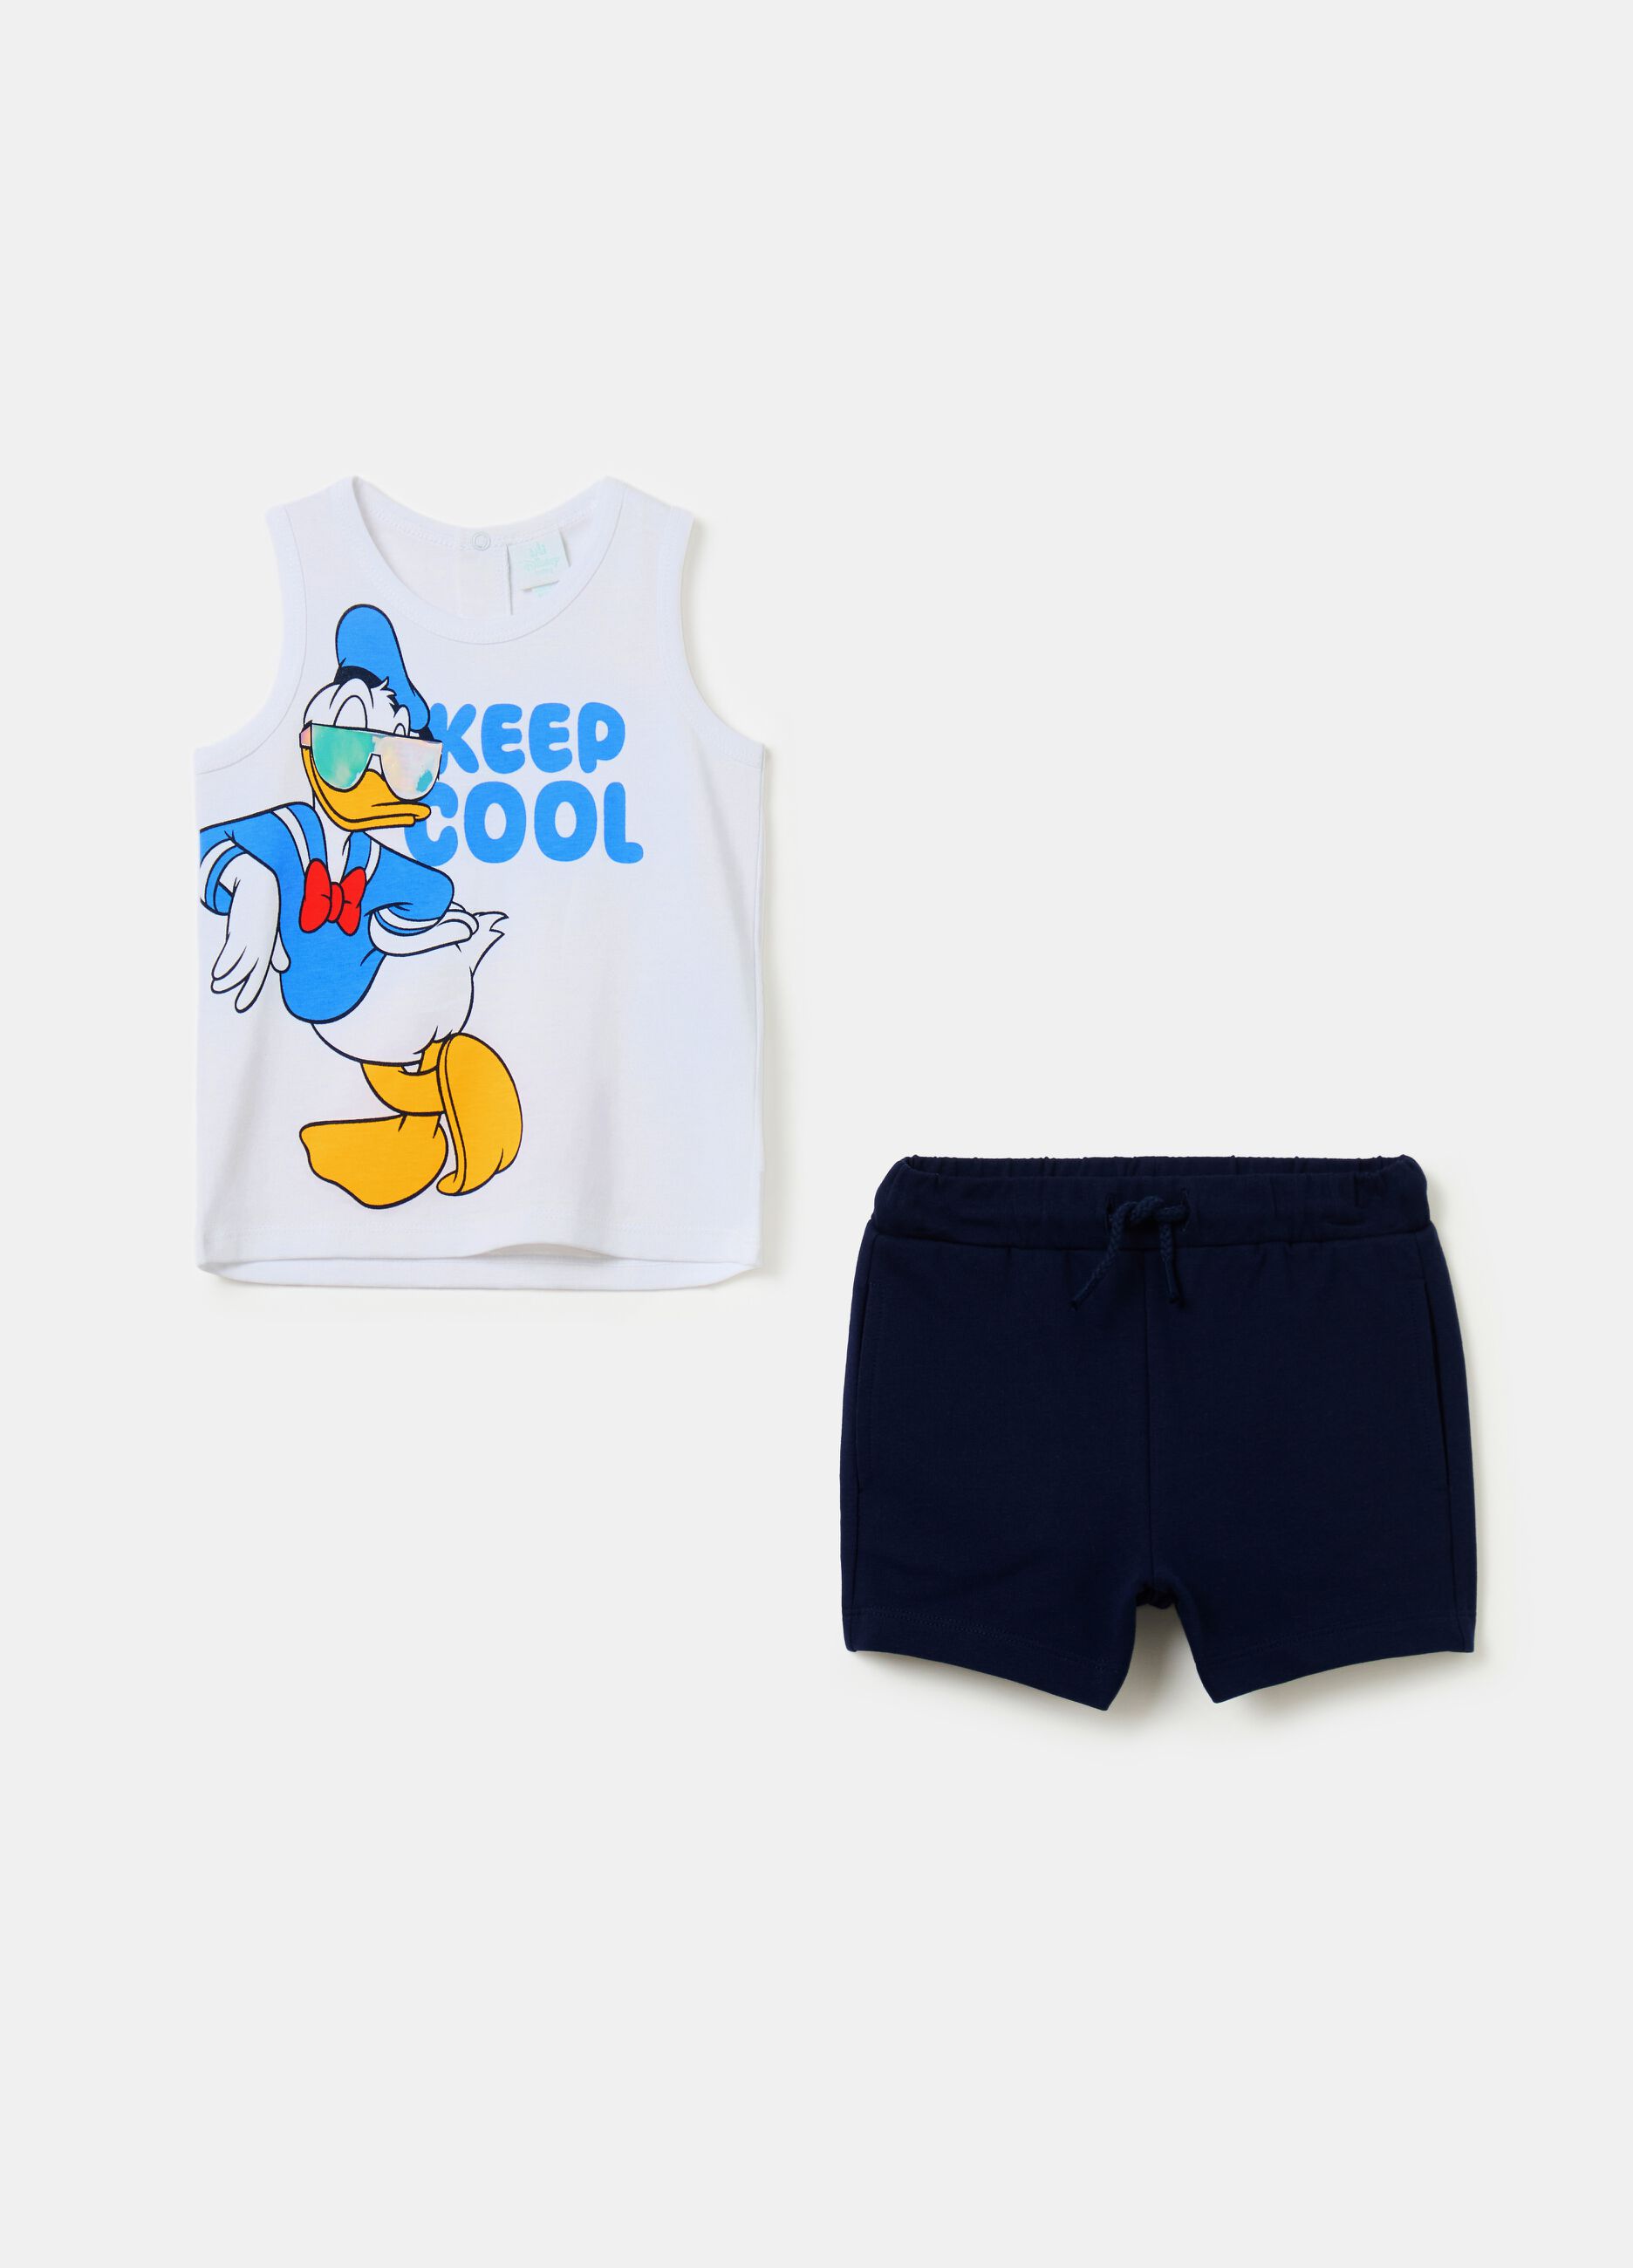 Cotton jogging set with Donald Duck 90 print